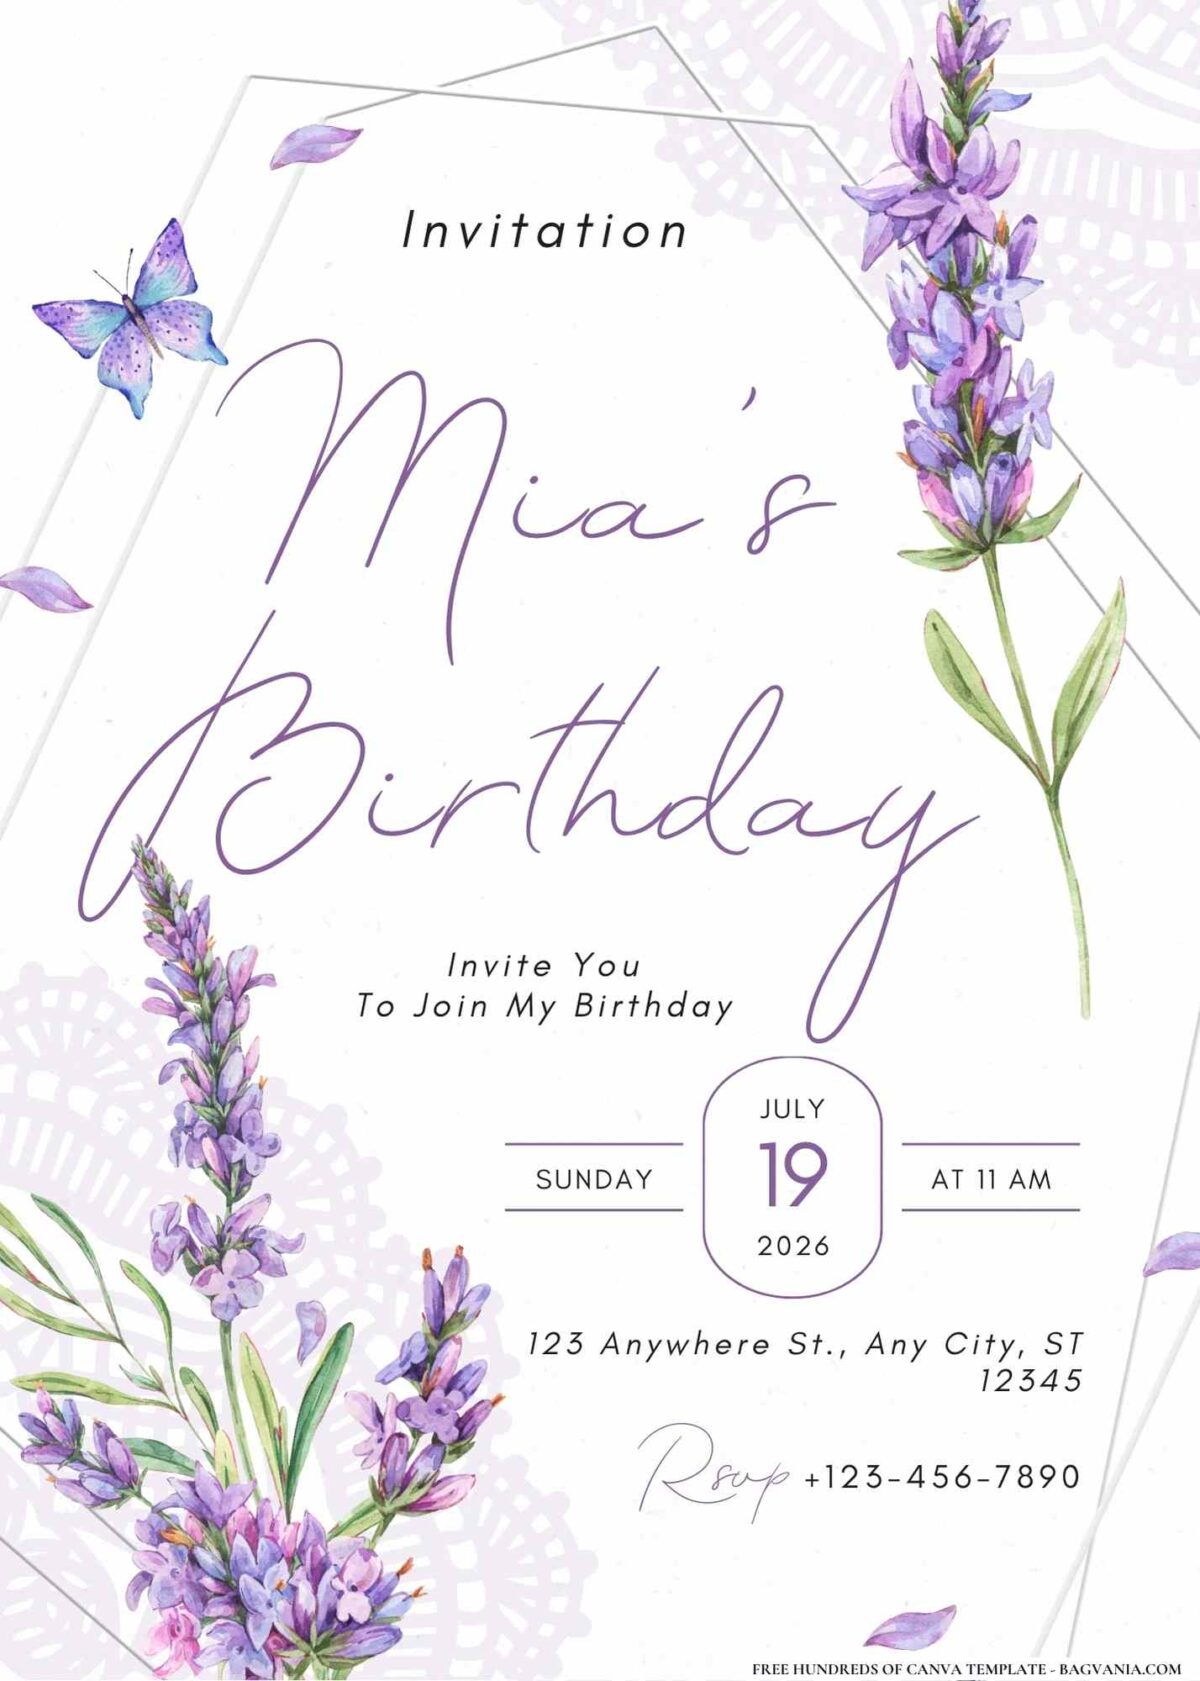 FREE Editable Lavender Lace Doily Birthday Invitation